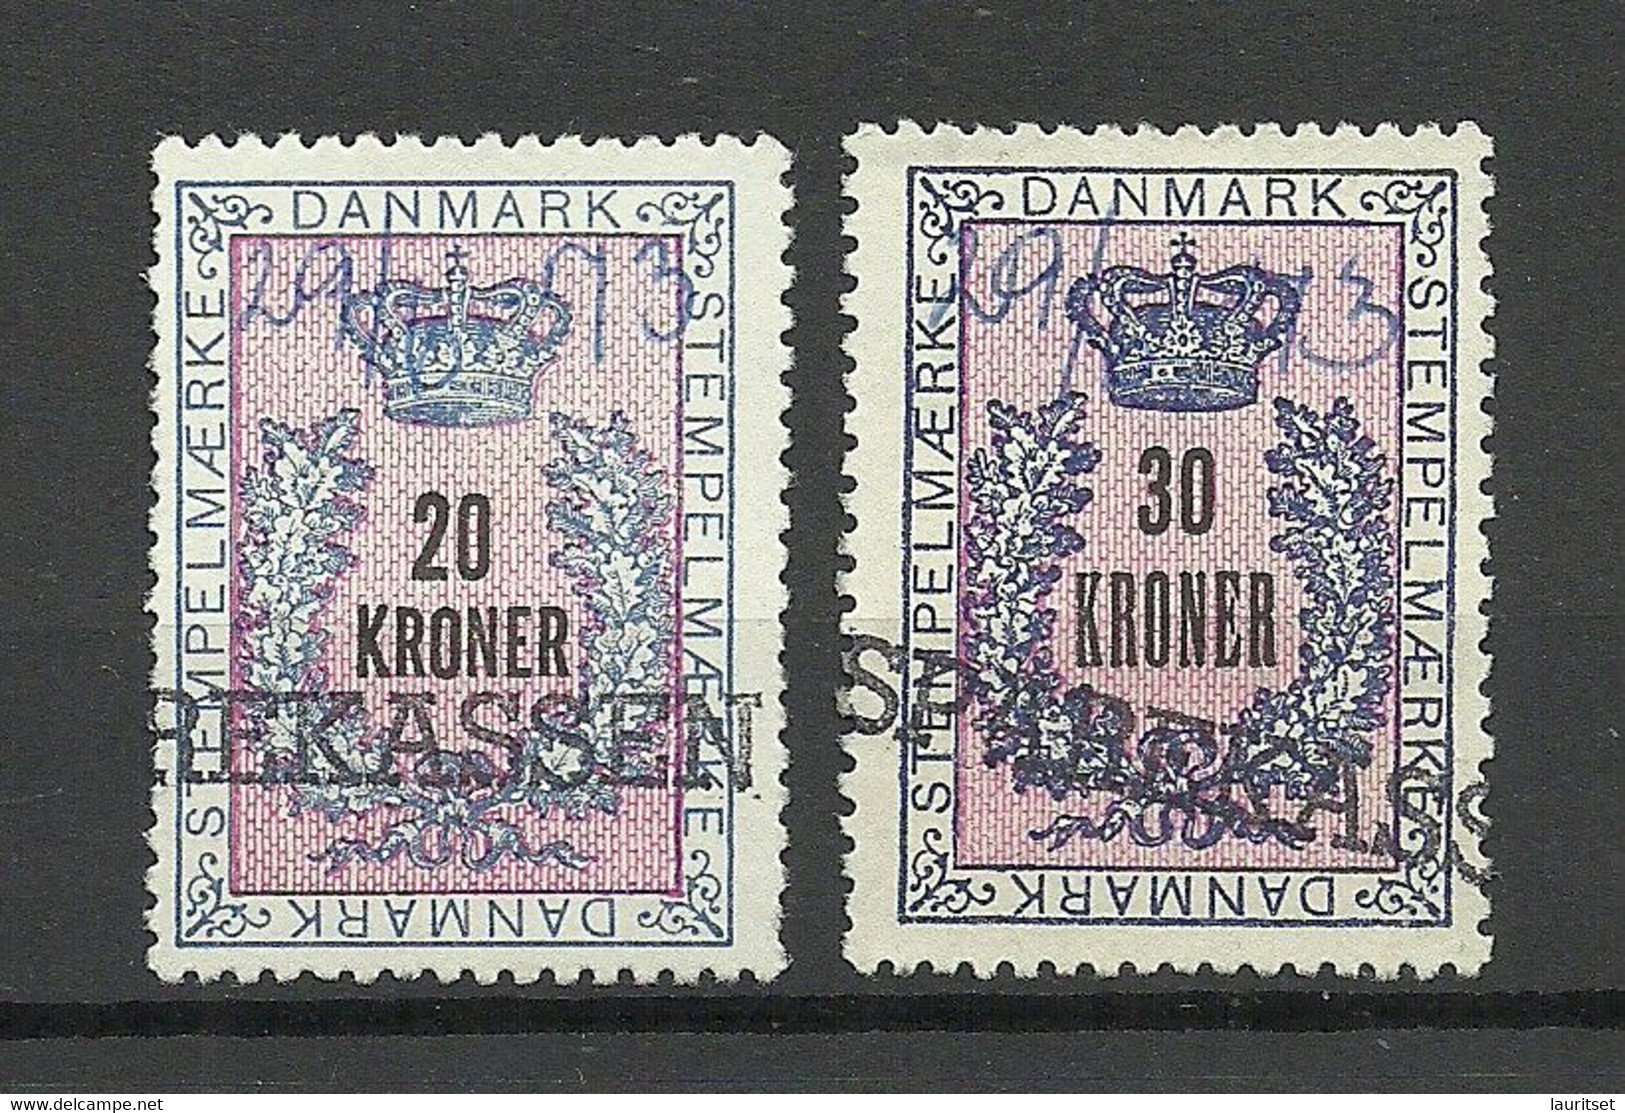 DENMARK Dänemark O 1973 Sparekassen Tax Stempelmarken Documentary Taxe Revenue Samps - Fiscaux